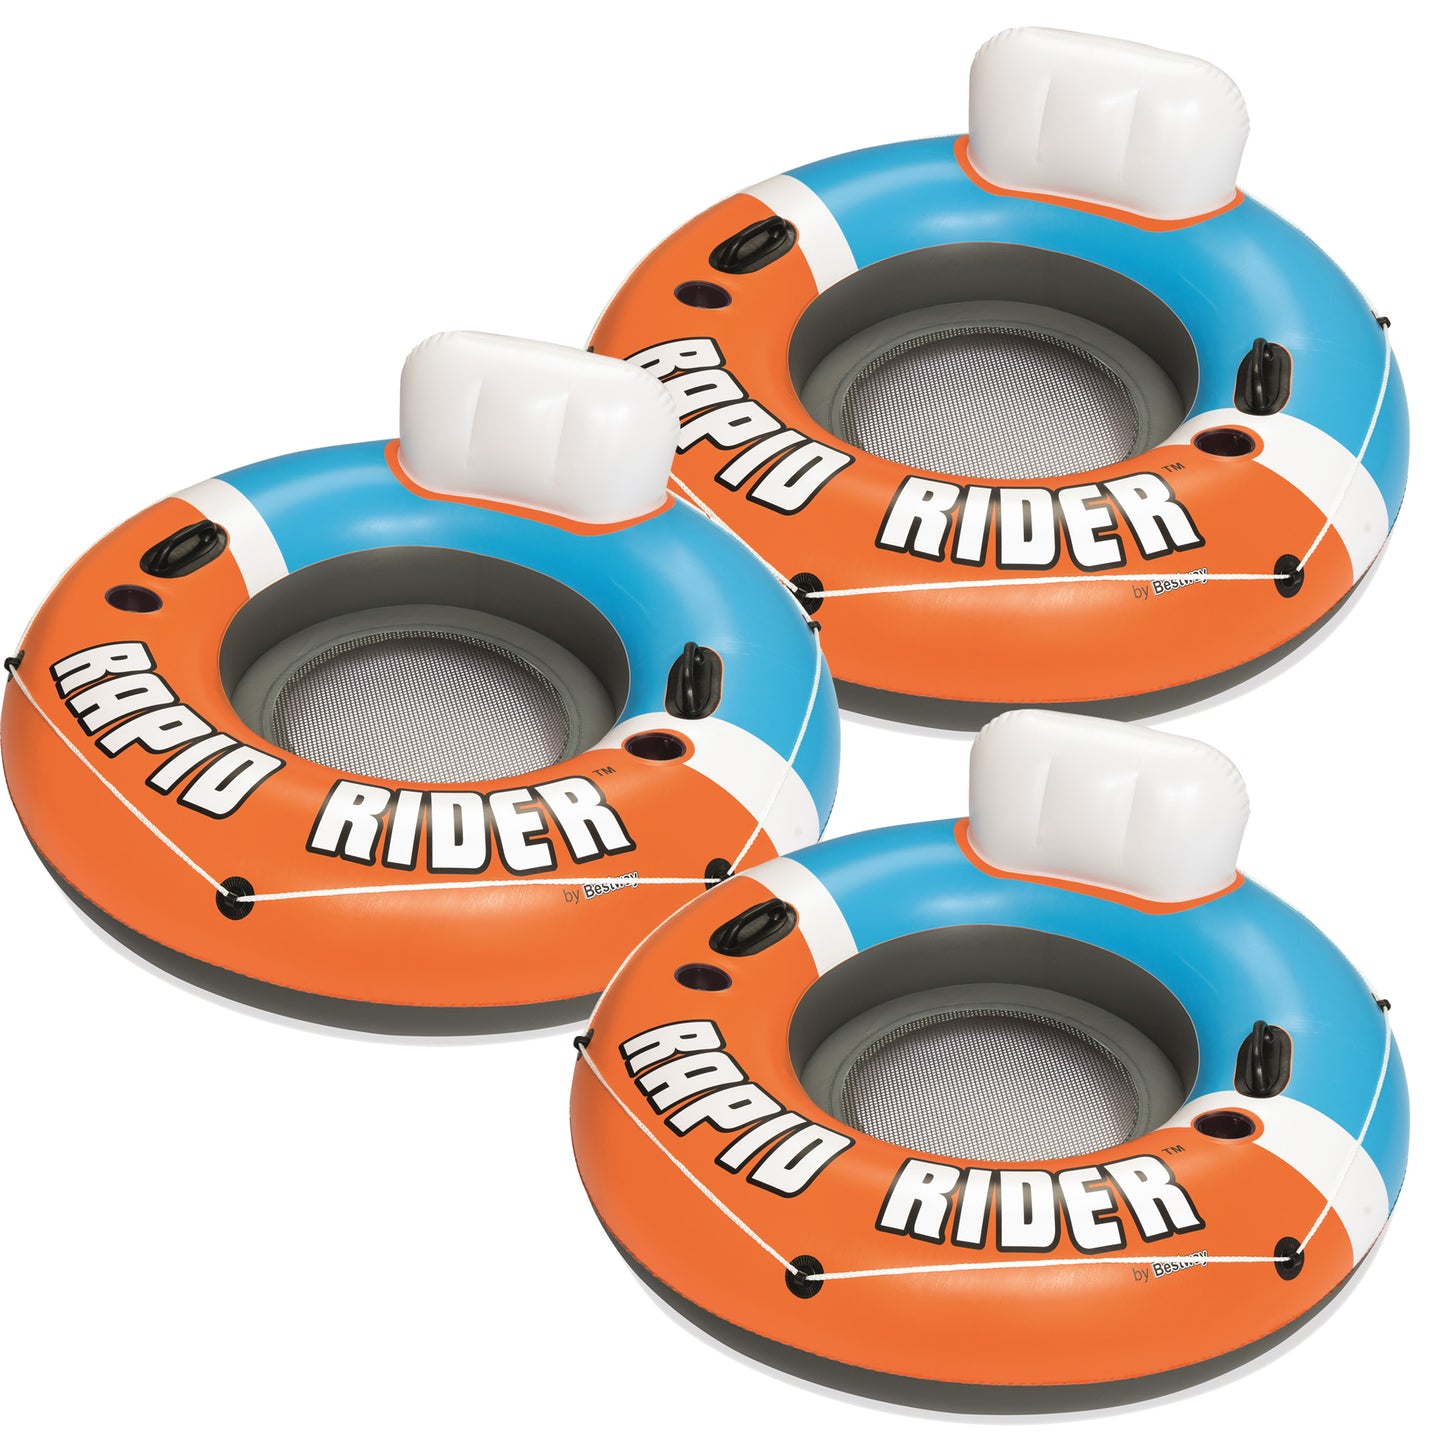 Bestway CoolerZ Rapid Rider Inflatable Blow Up Pool Chair Tube, Orange (3 Pack)